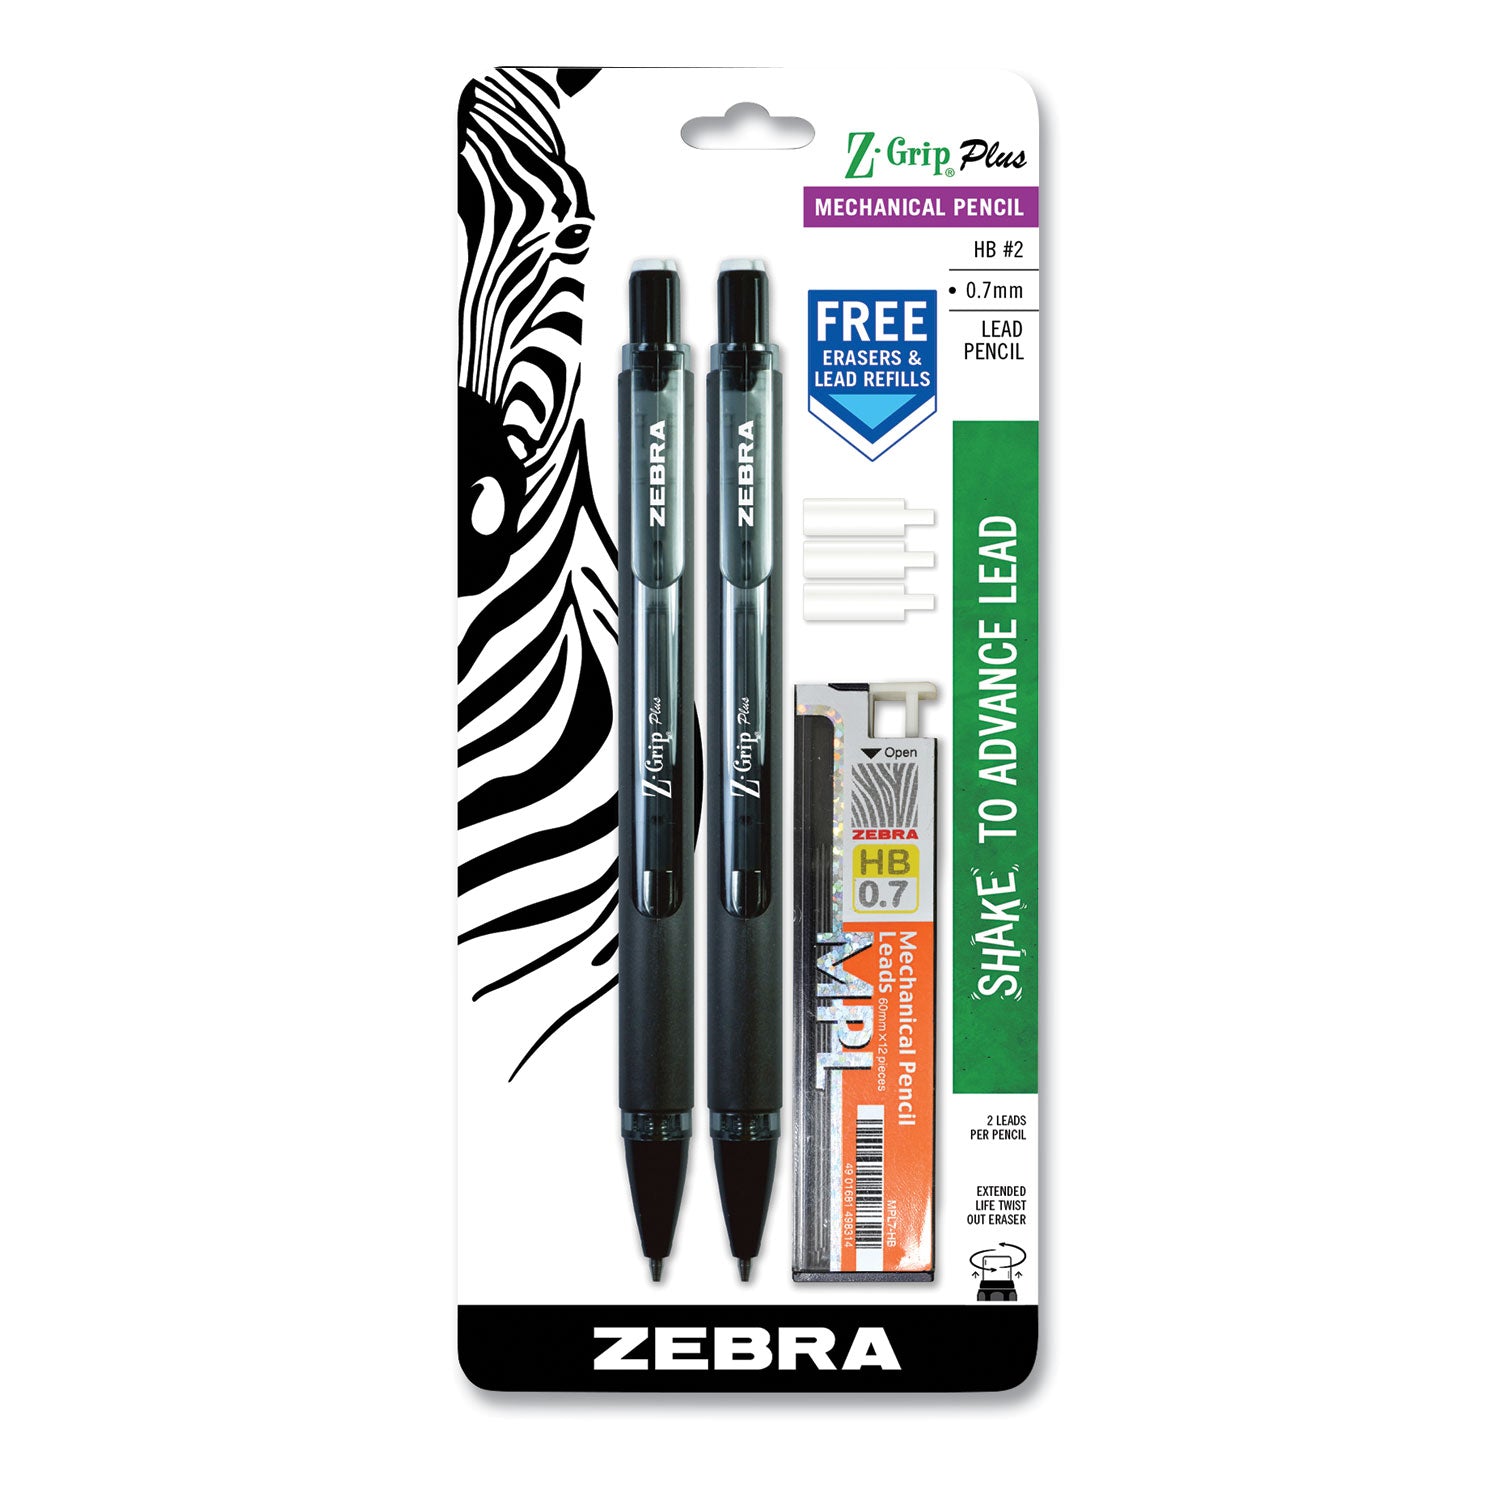 z-grip-plus-mechanical-pencil-07-mm-hb-#2-black-lead-smoke-black-barrel-2-pack_zeb55412 - 1